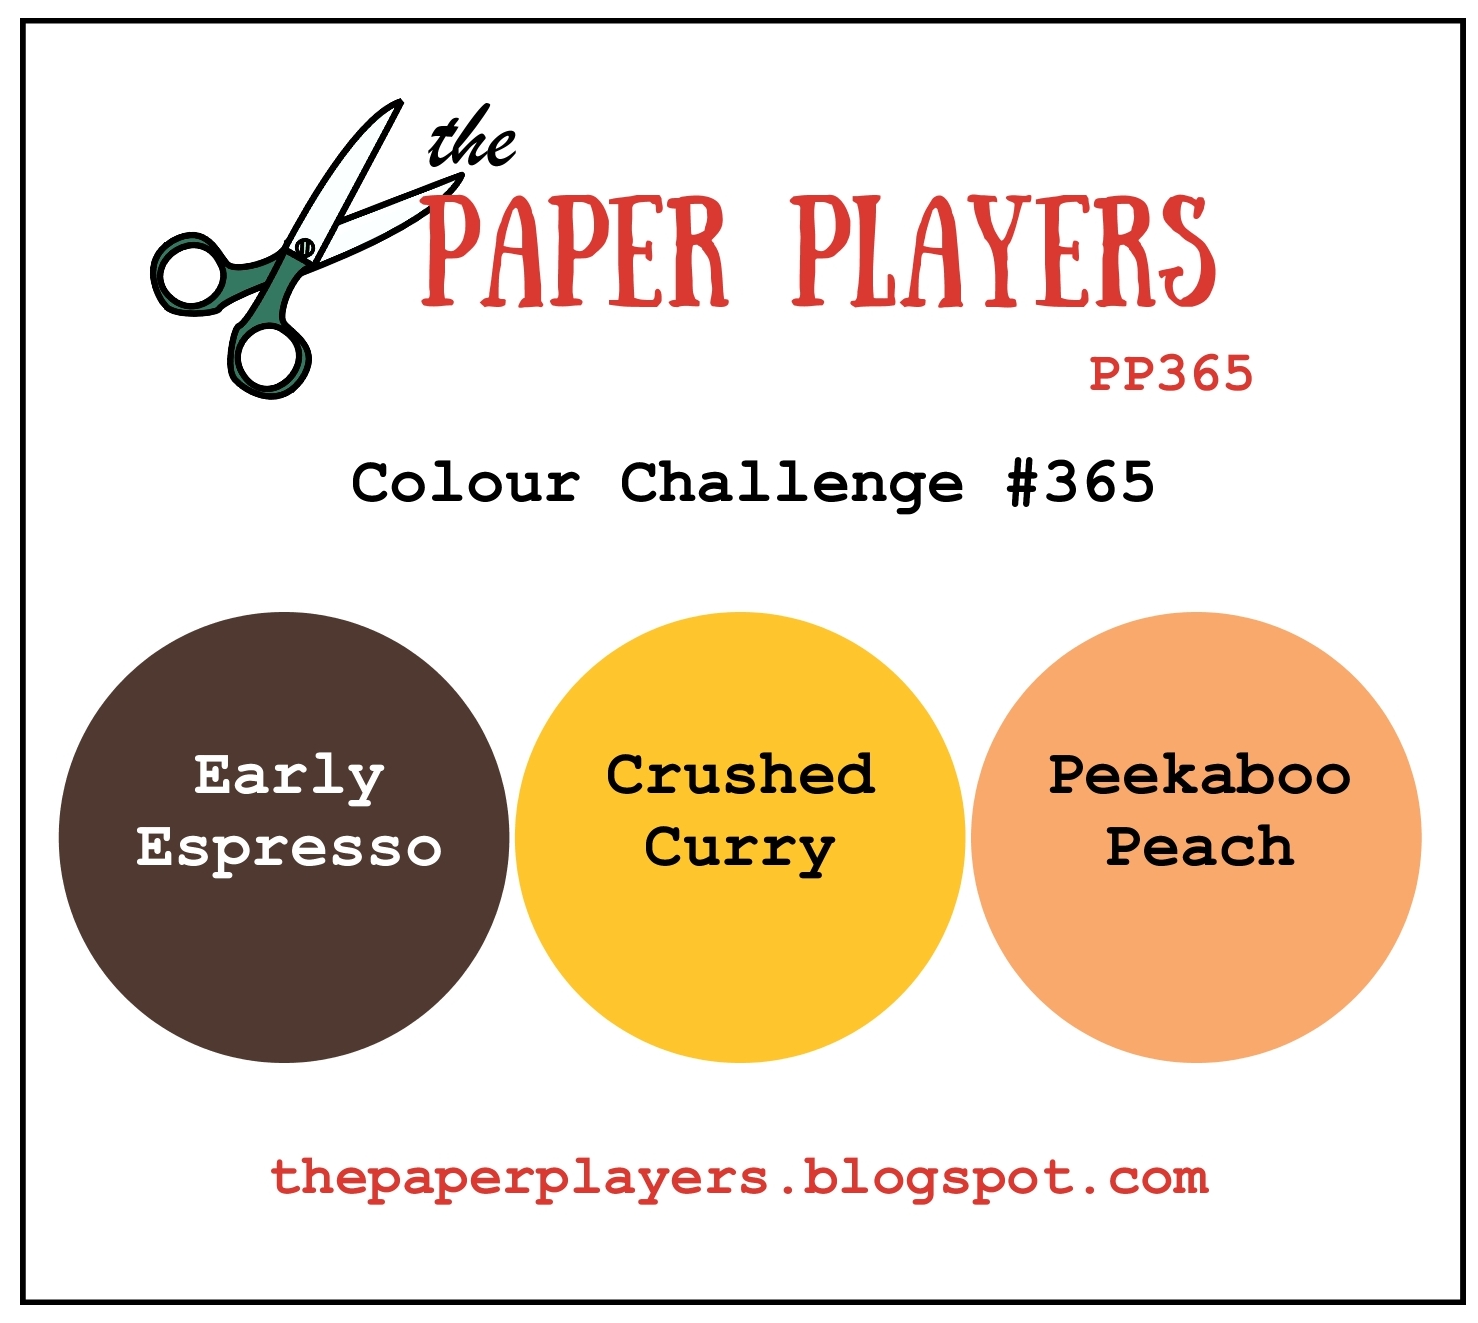 Paper plays. Challenge на цвет.